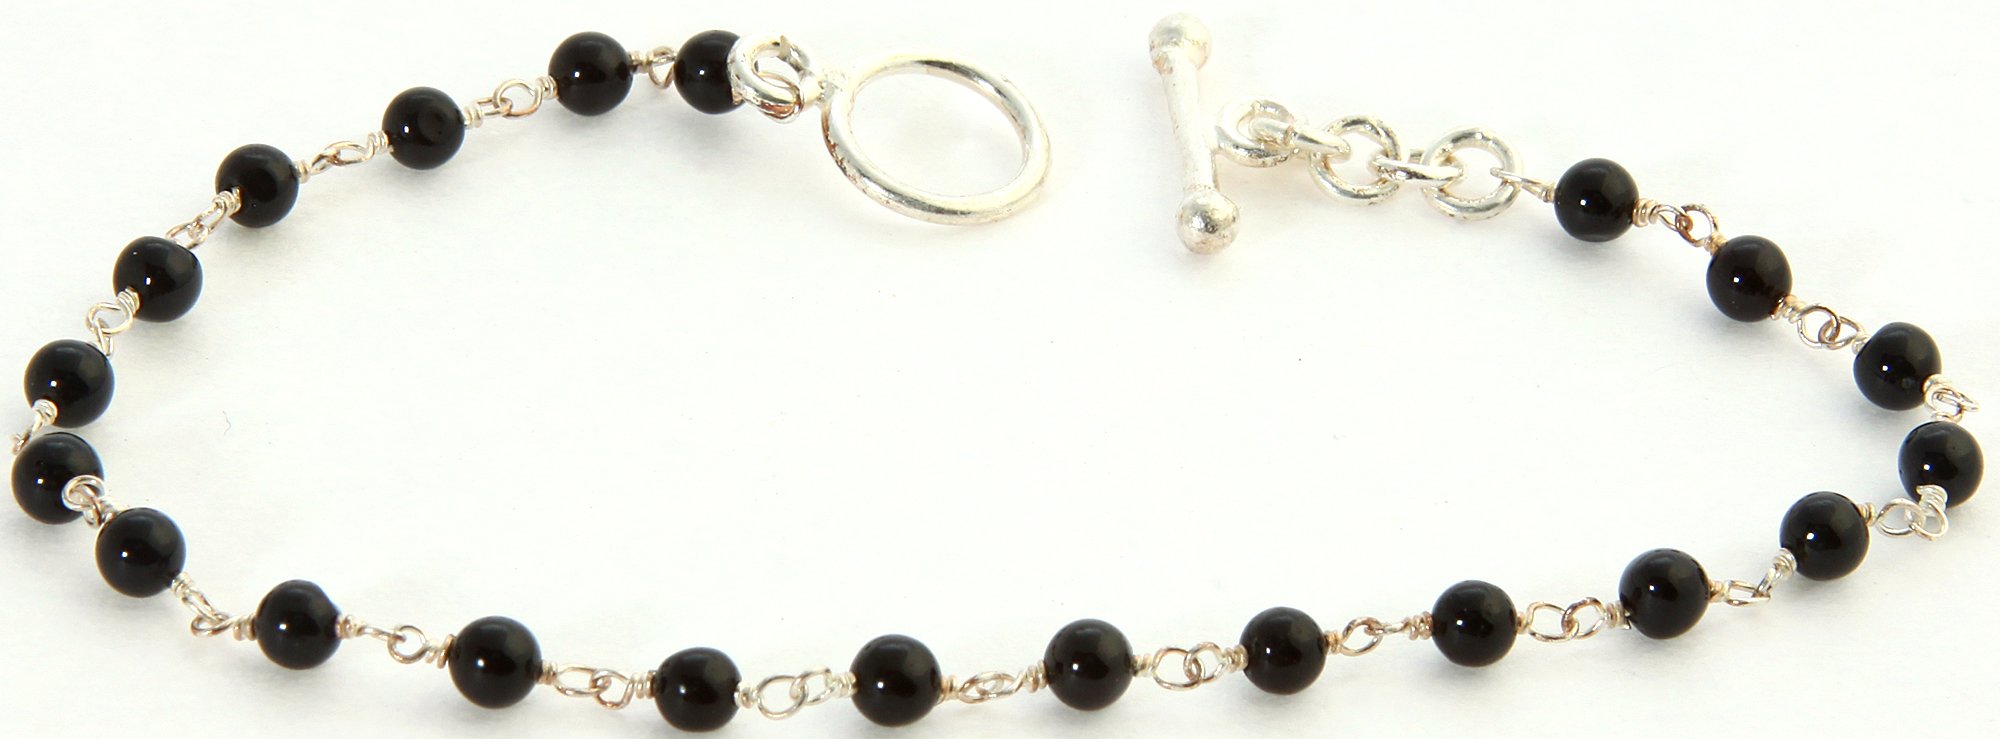 Black onyx glossy beads bracelet with skull motif 